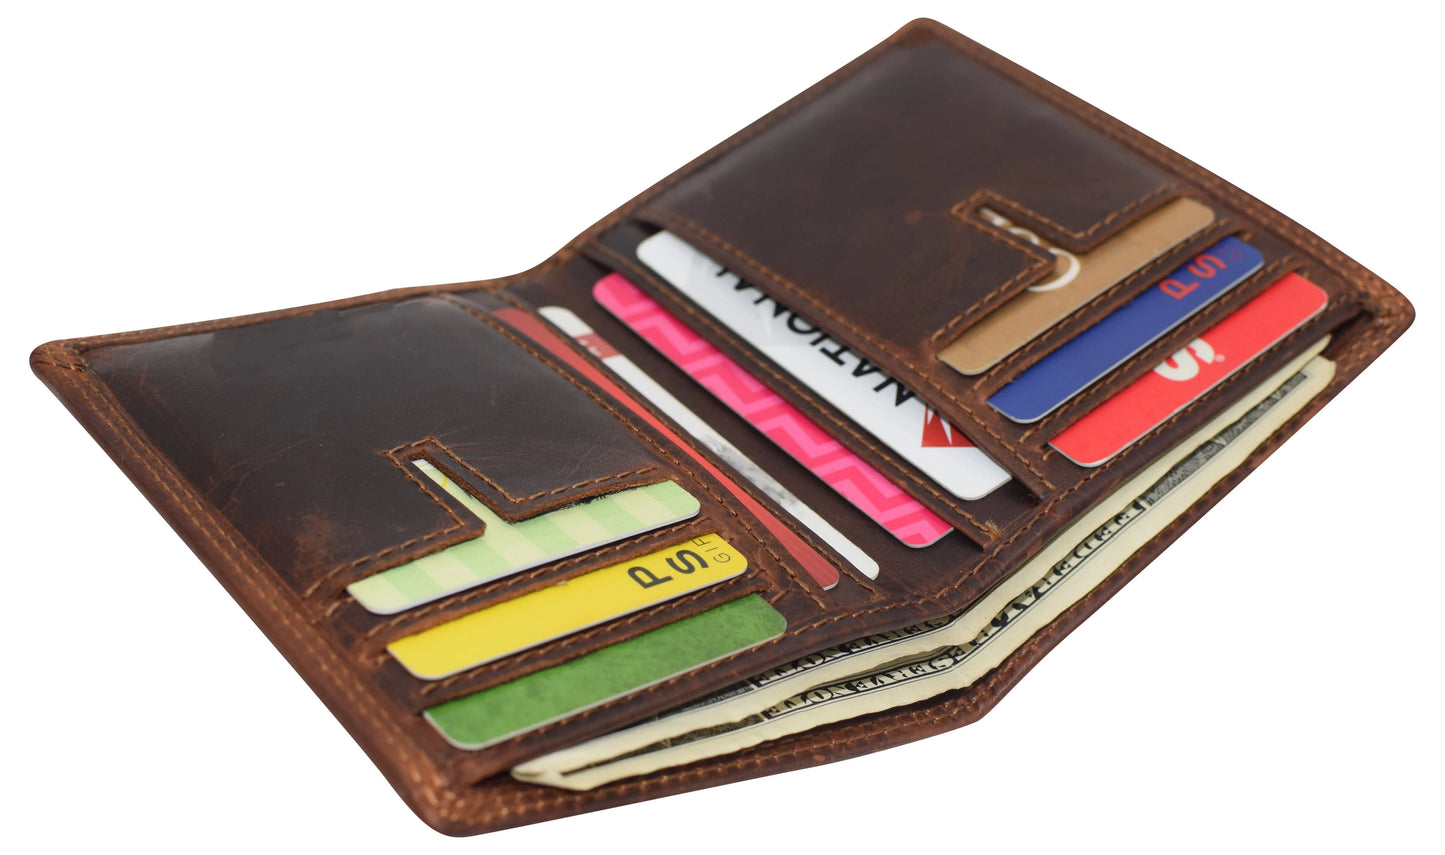 Hunter Brown RFID Blocking Genuine Leather Bifold Wallet Multi-Card Holder